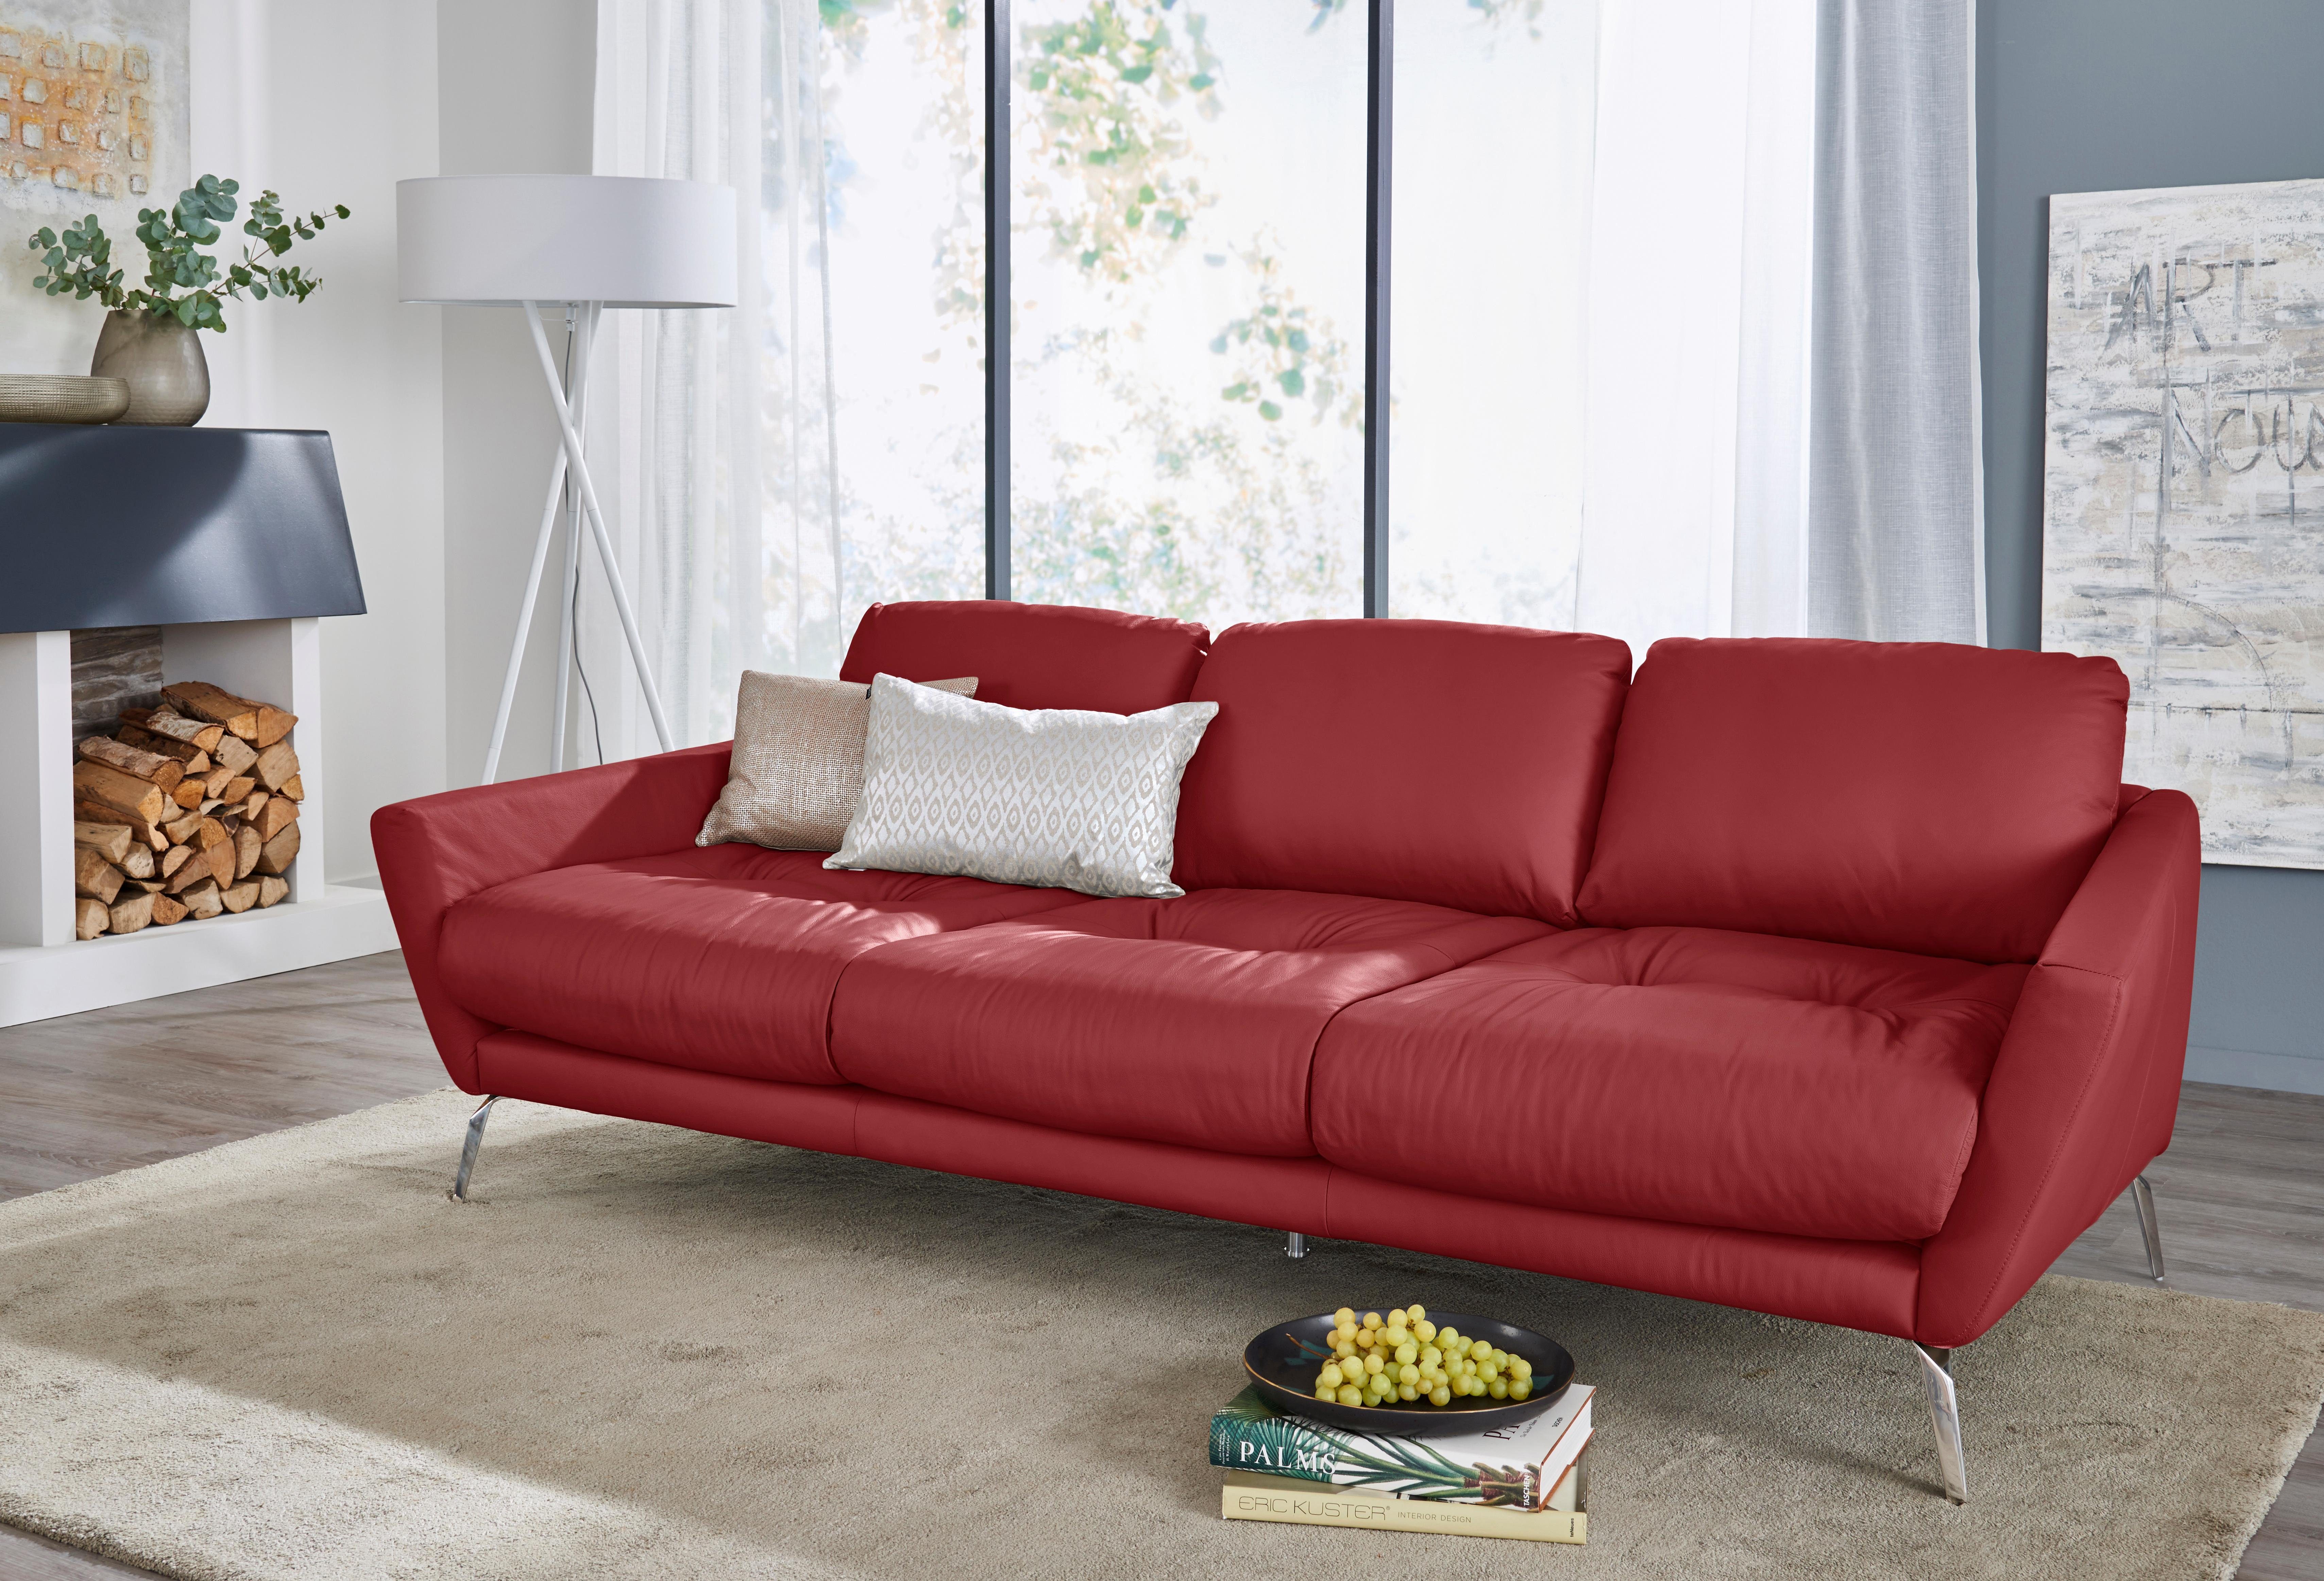 Big-Sofa dekorativer glänzend softy, Füße Chrom Heftung Sitz, im mit W.SCHILLIG